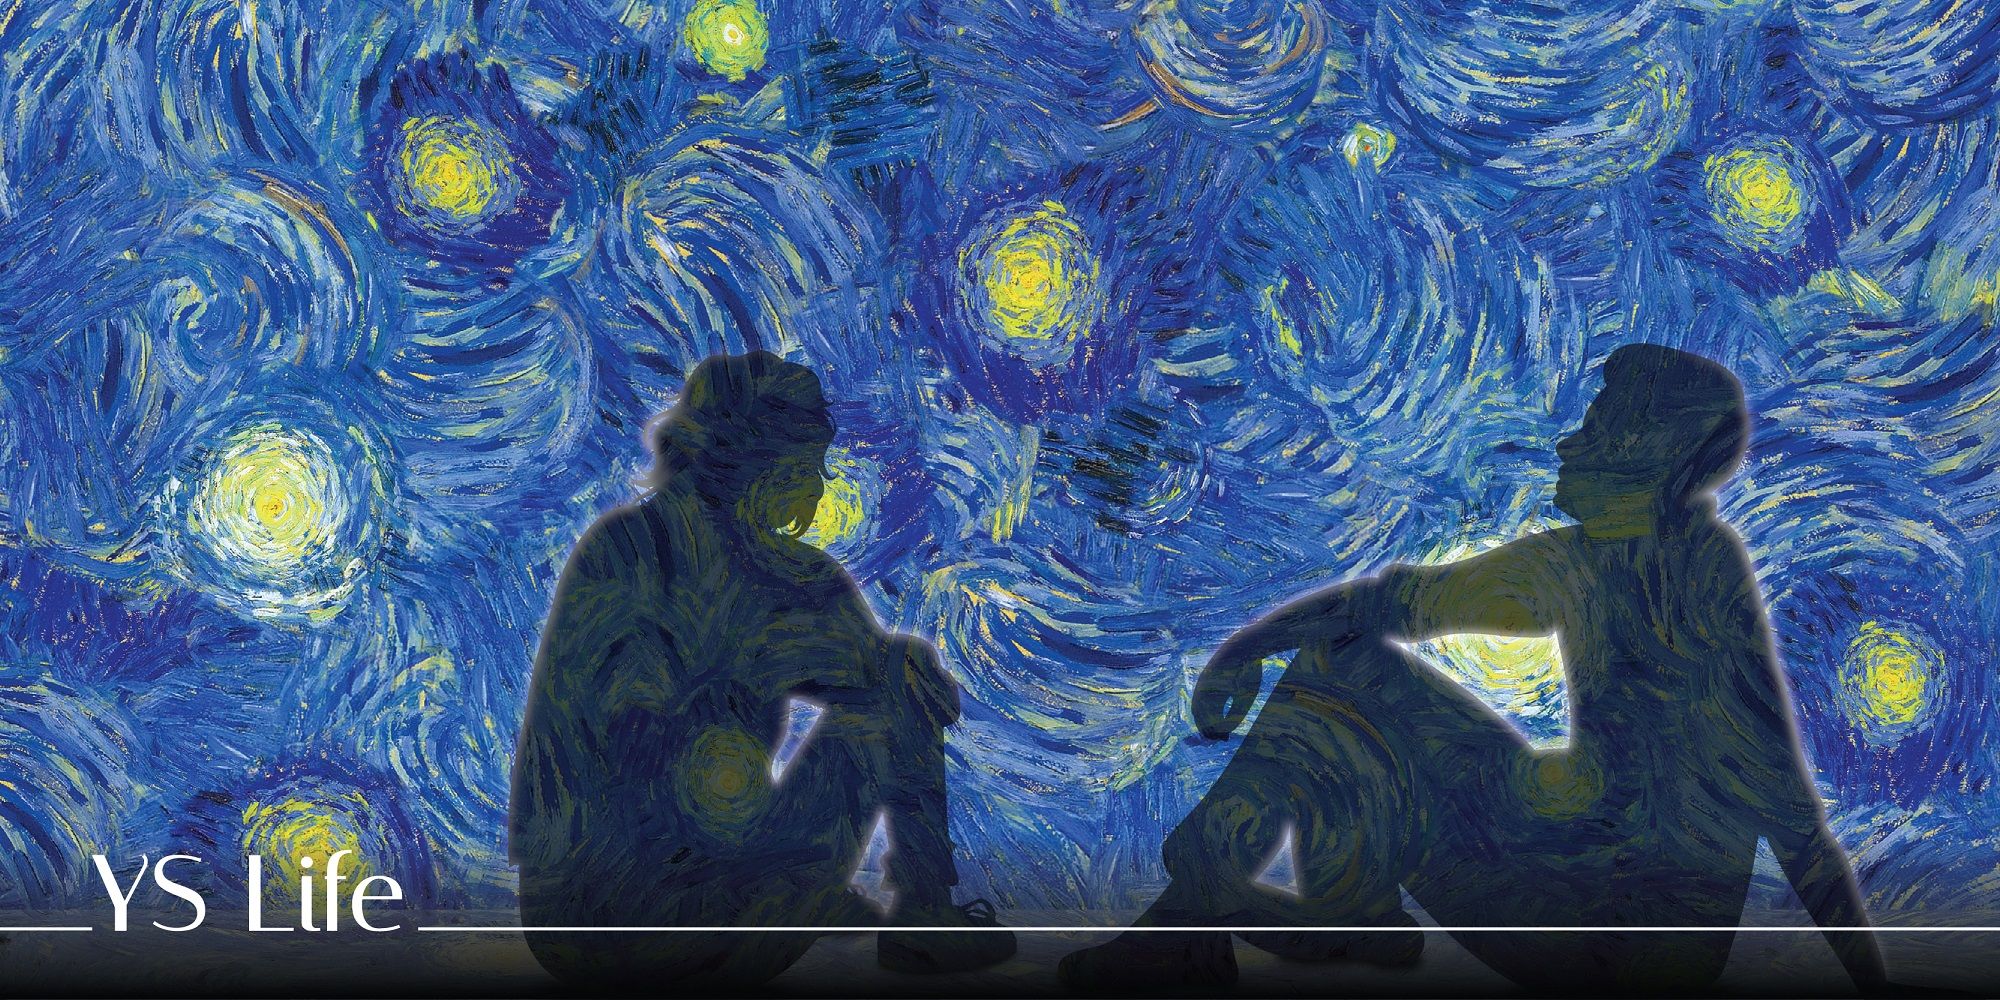 Vincent van Gogh: Two men throw soup on Vincent van Gogh's iconic